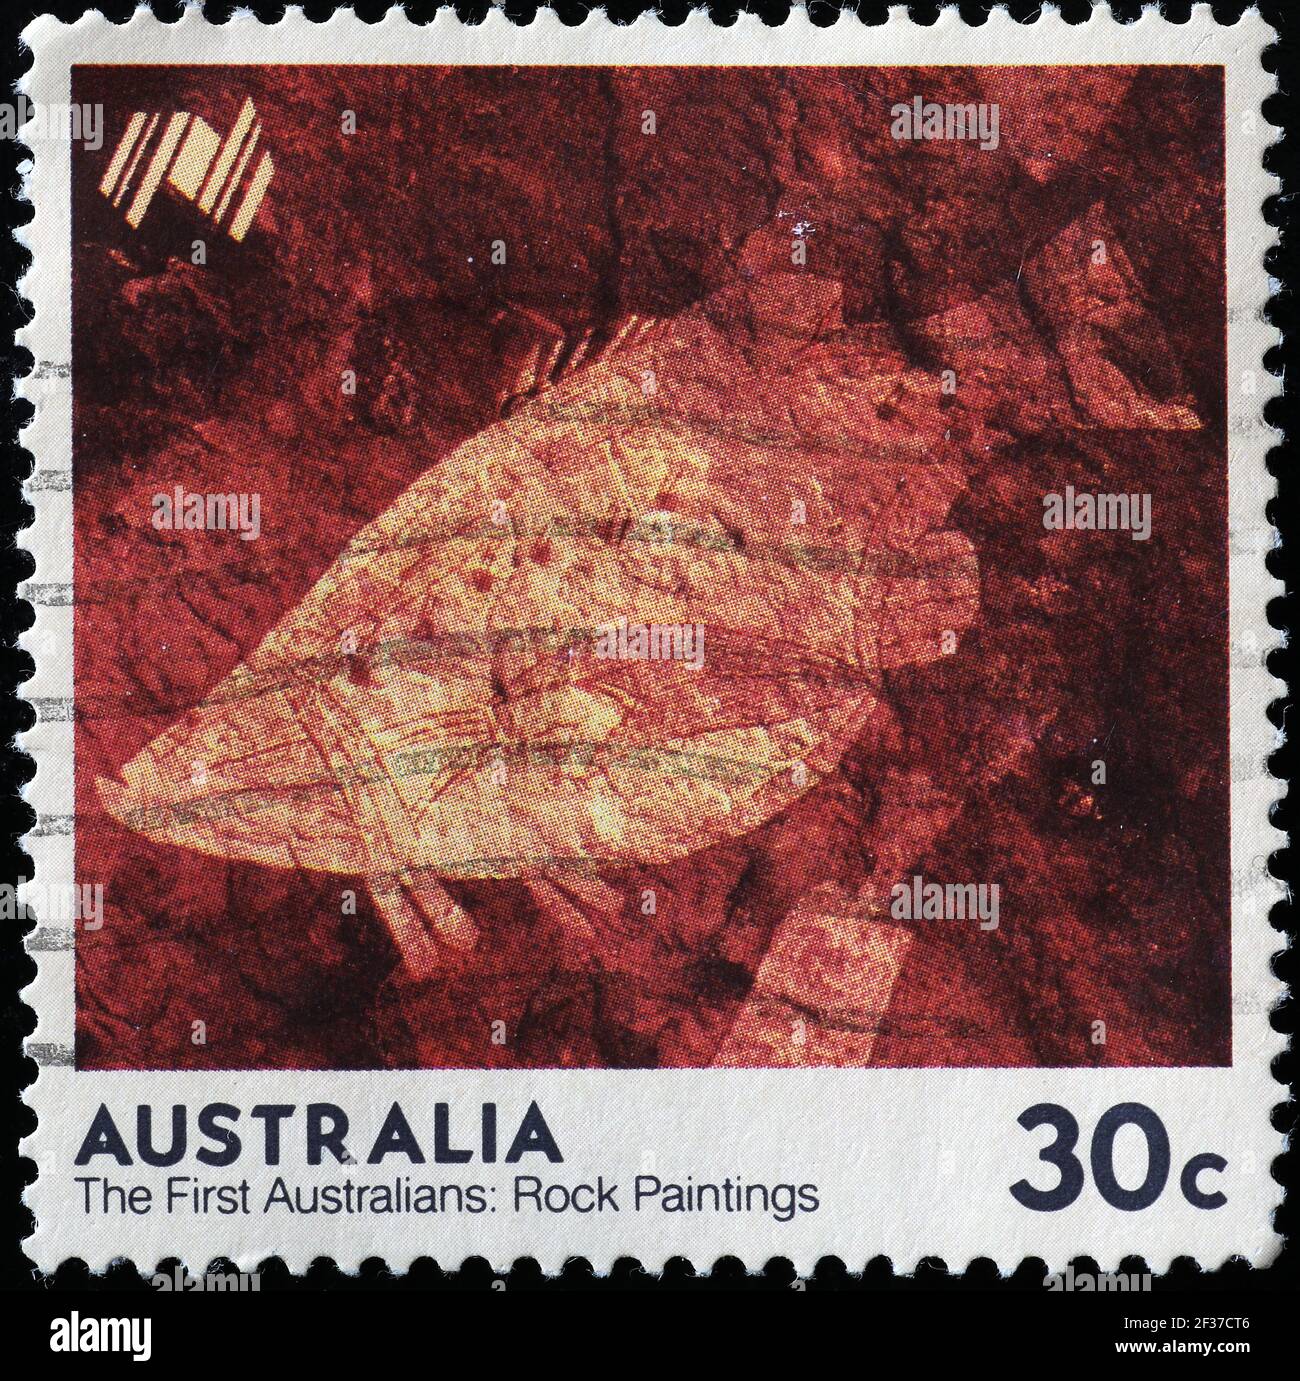 Aboriginal rock painting of a fish on australian stamp Stock Photo